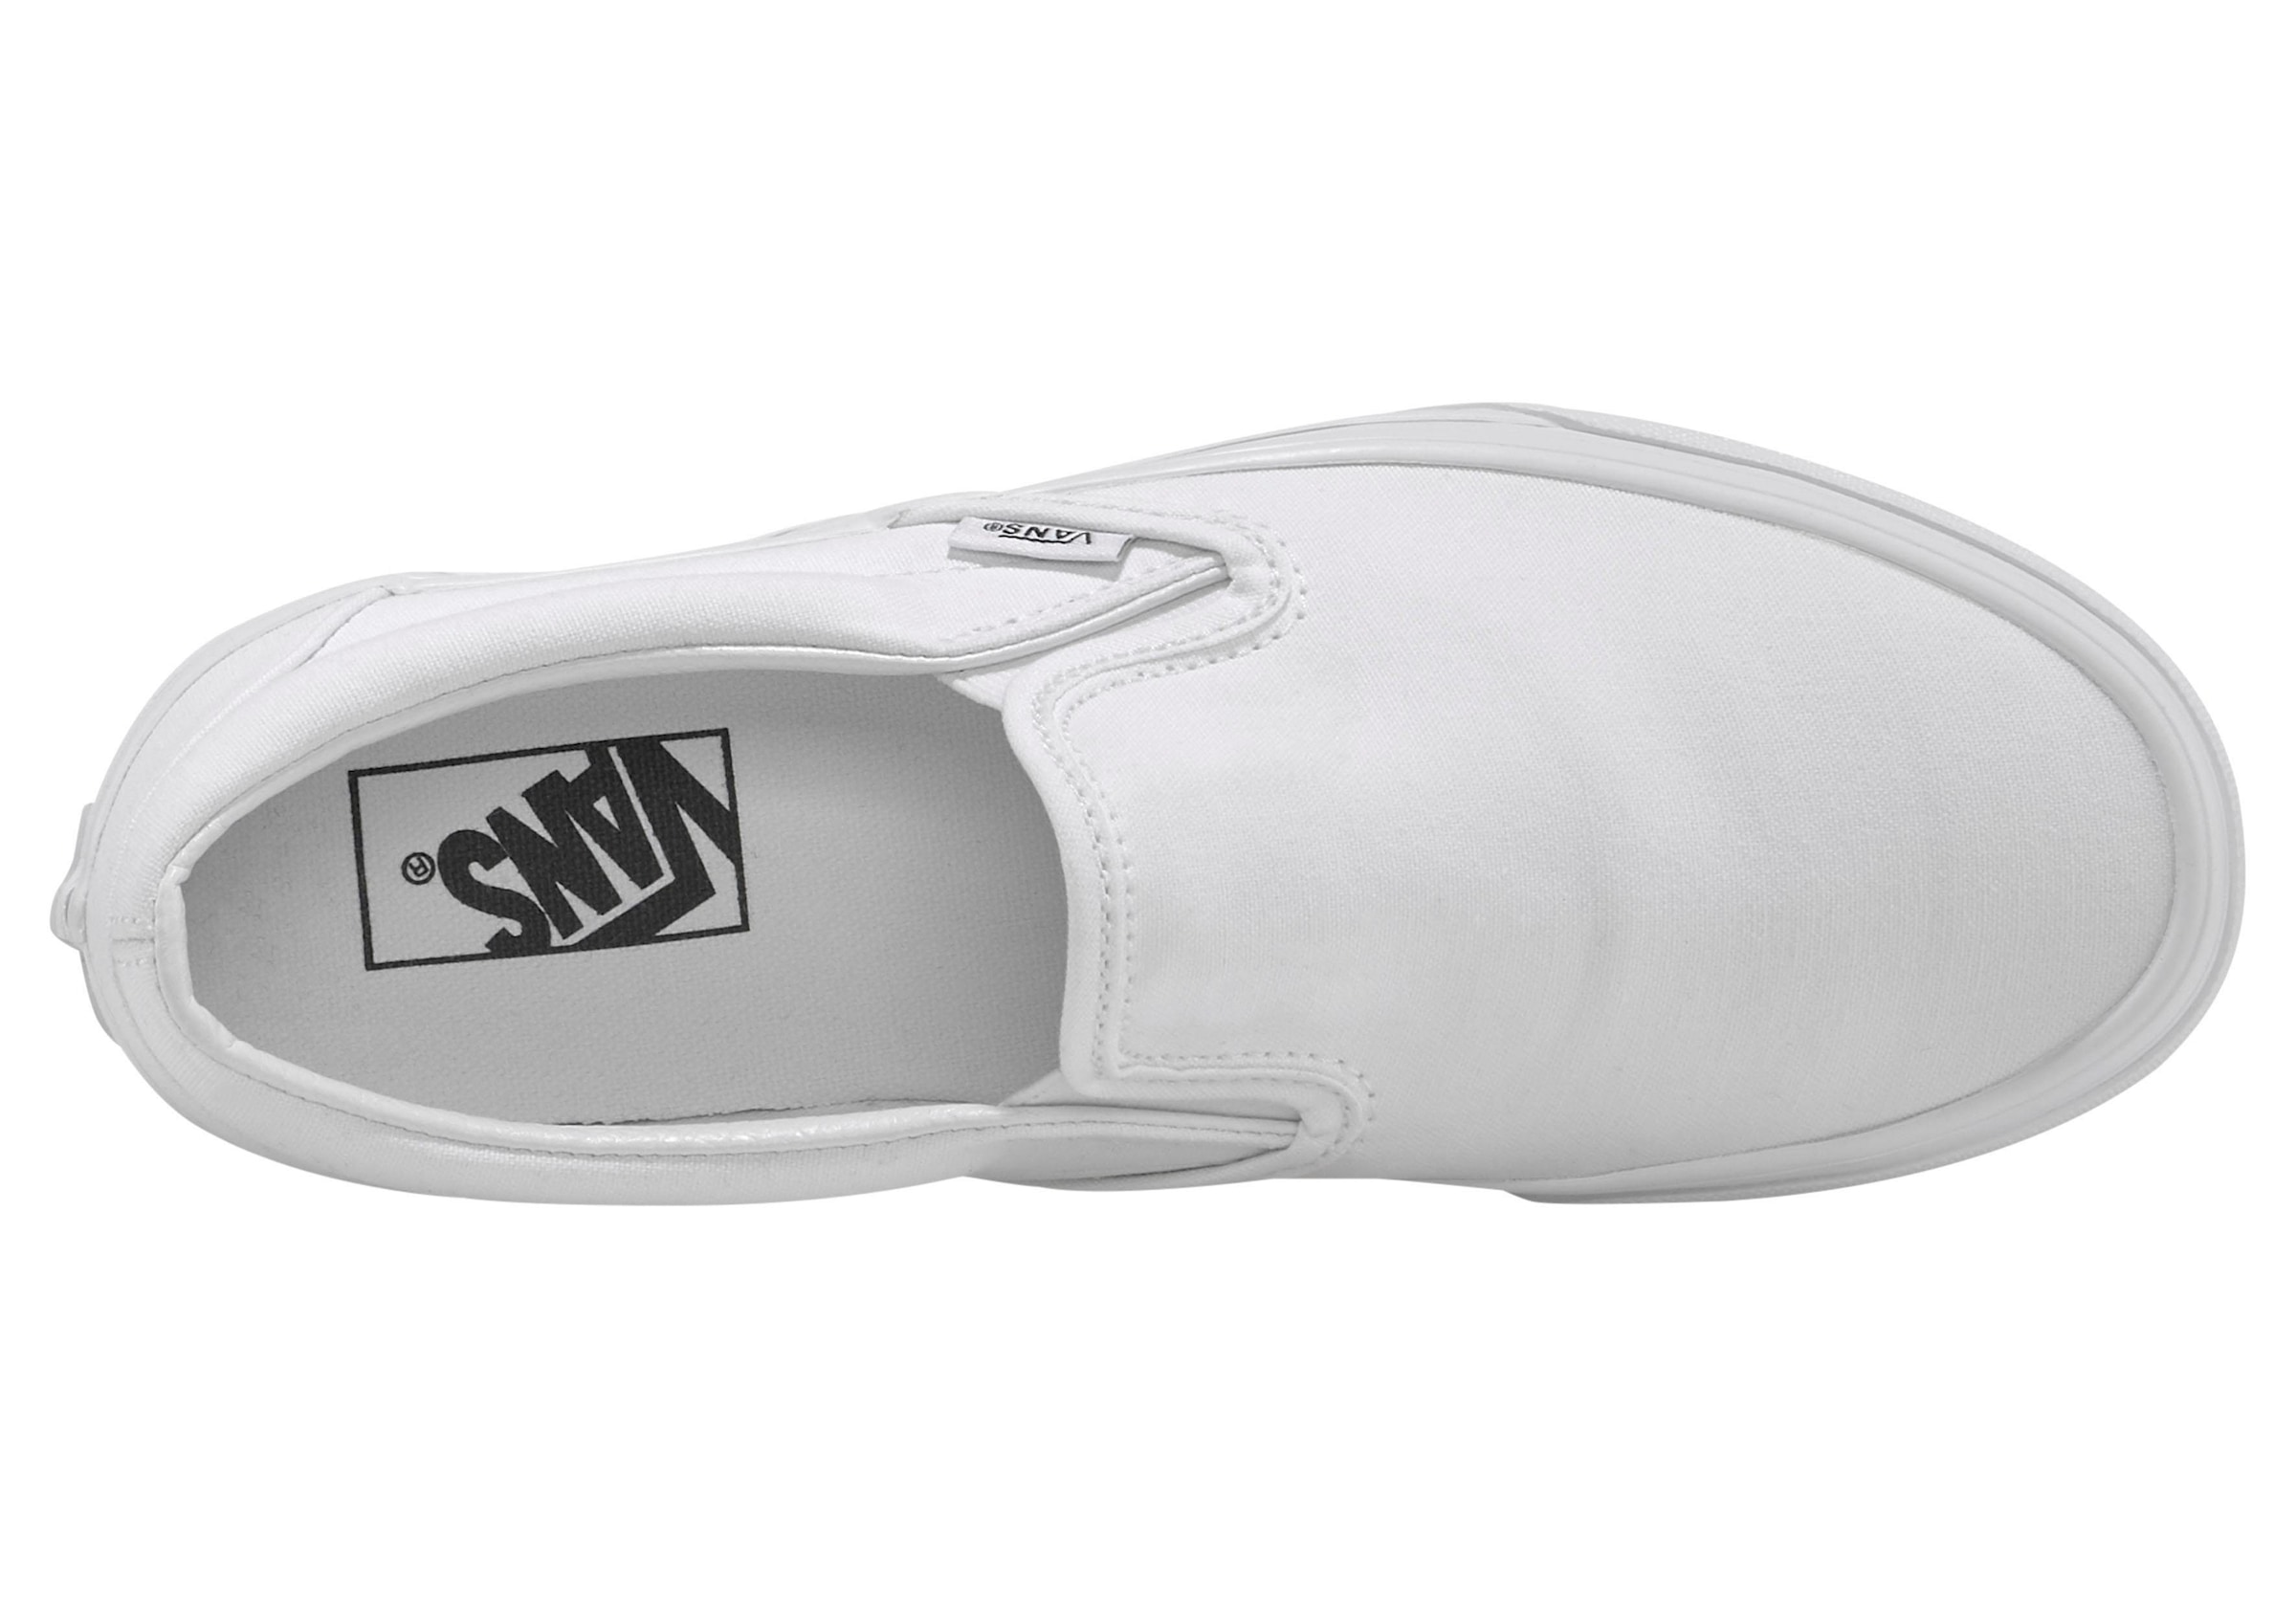 Vans Slip-On Sneaker »Classic Slip-On«, aus textilem Canvas-Material